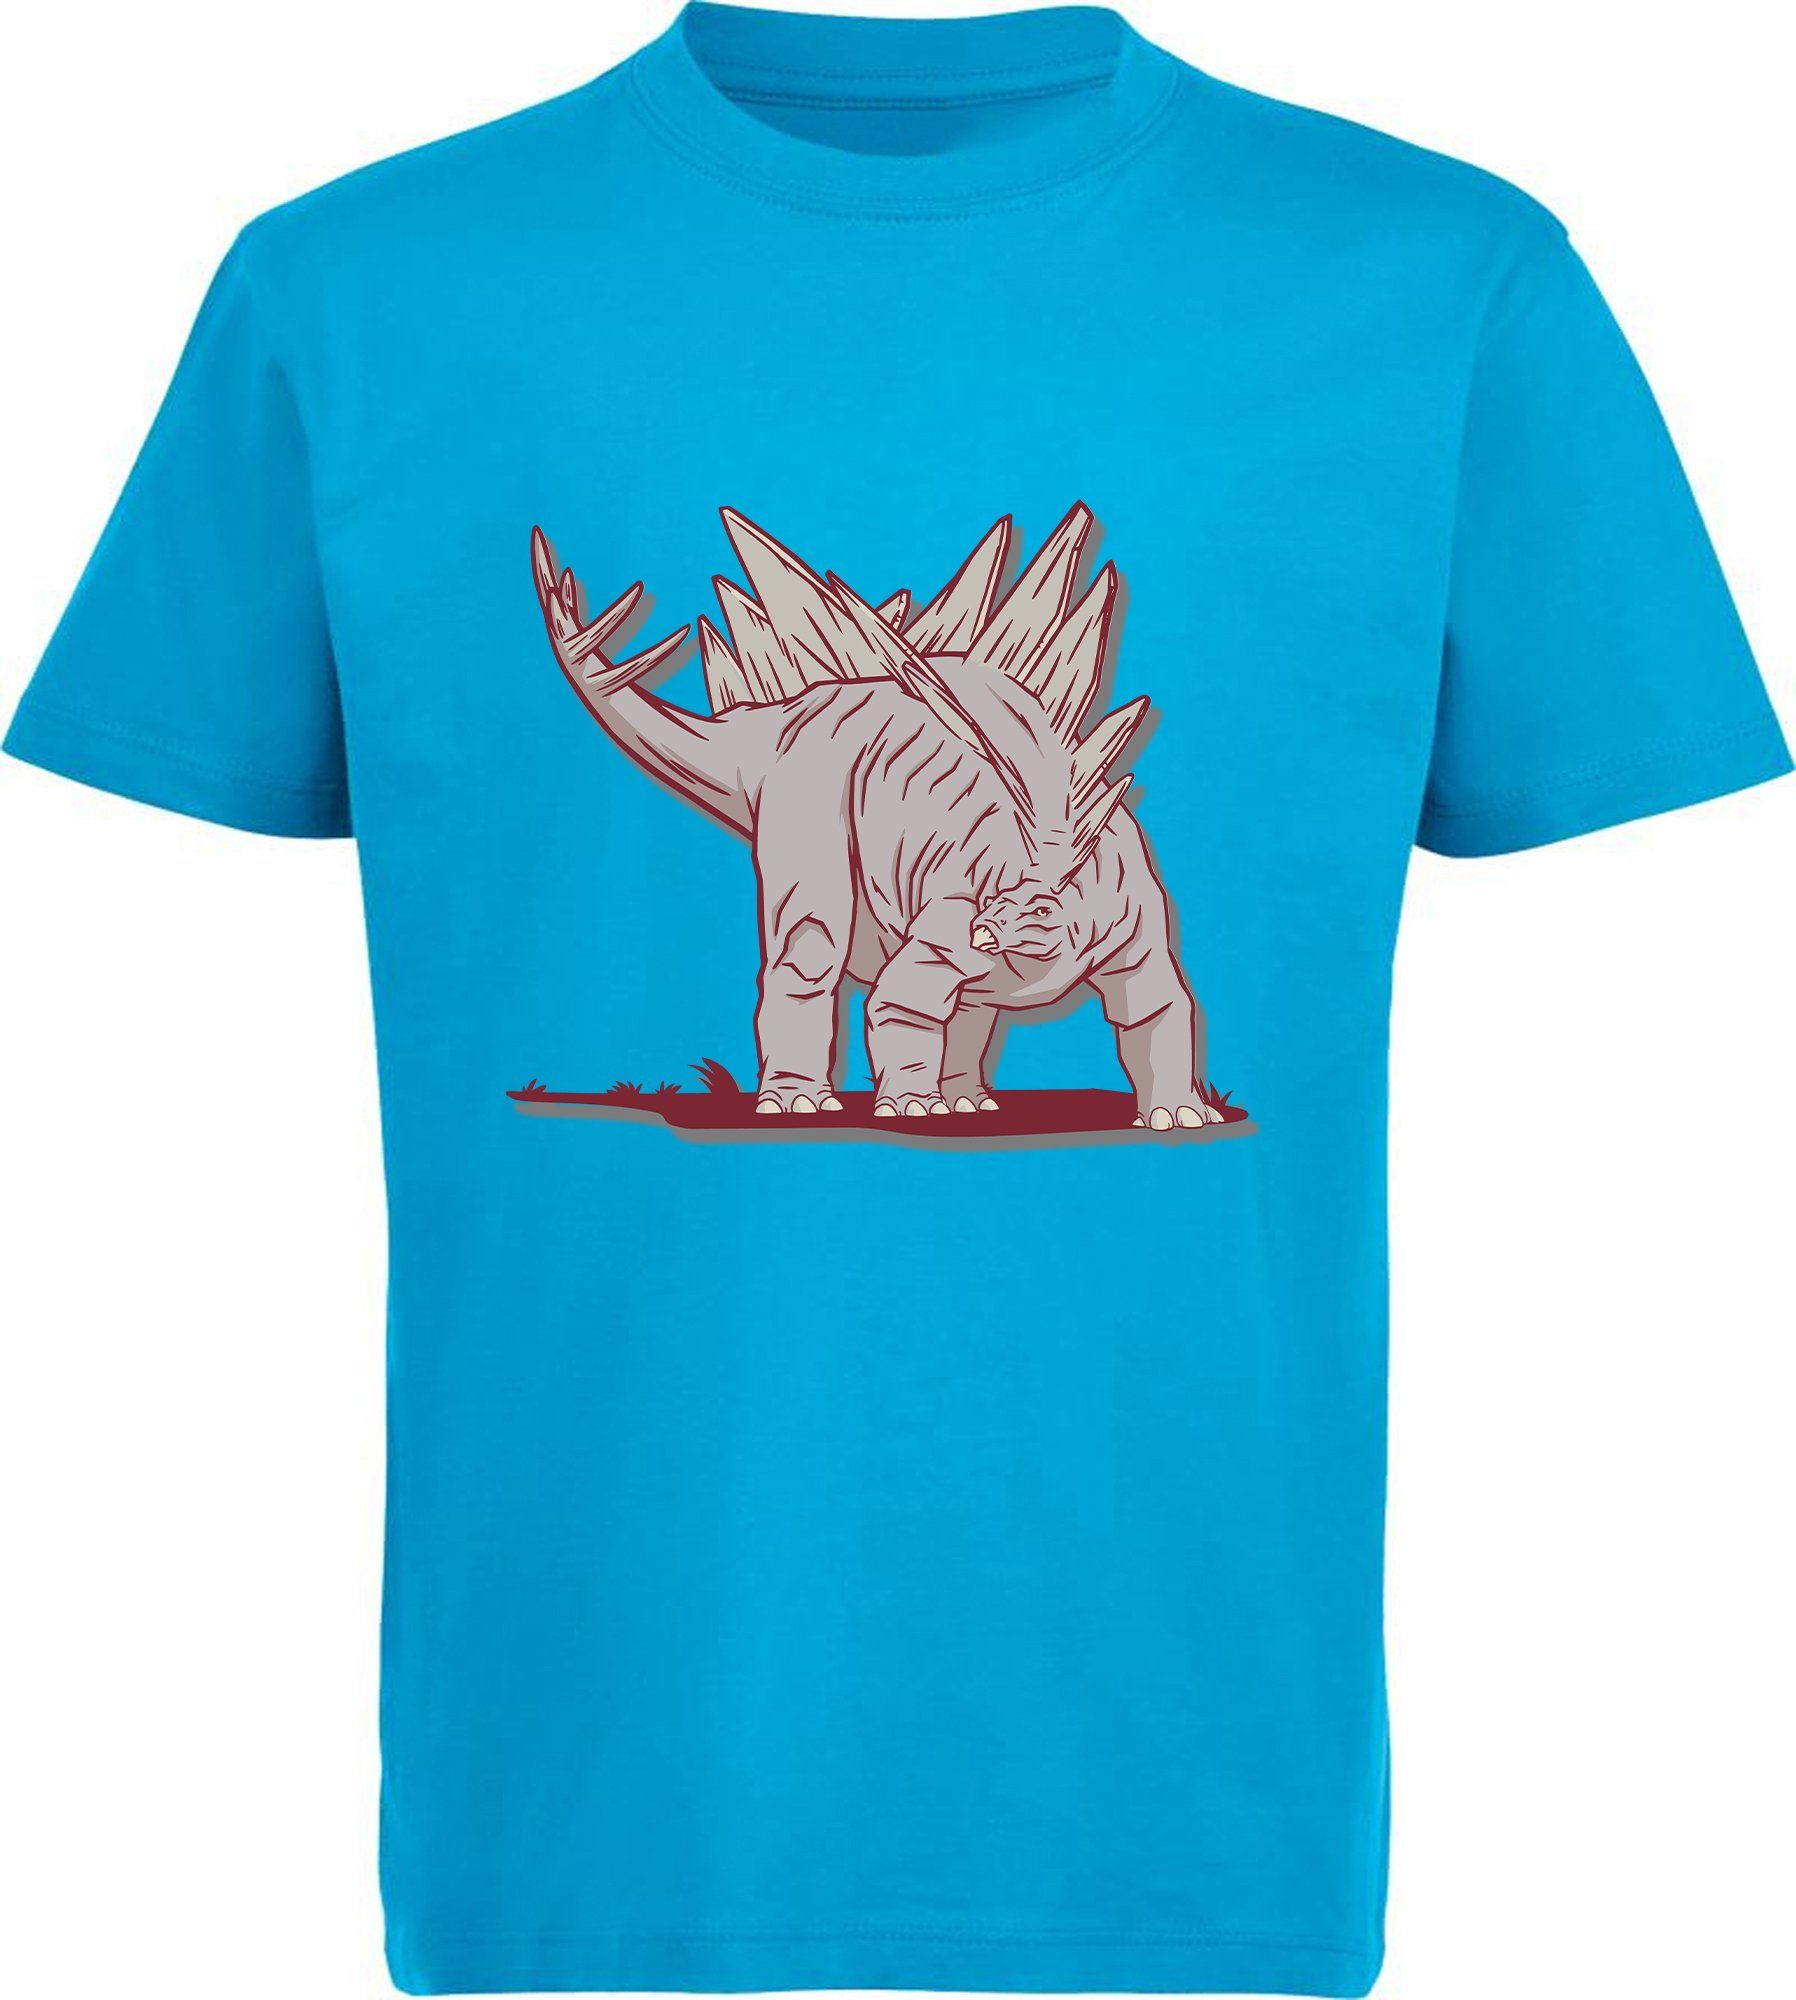 MyDesign24 Print-Shirt bedrucktes Kinder T-Shirt mit Stegosaurus Baumwollshirt mit Dino, schwarz, weiß, rot, blau, i88 aqua blau